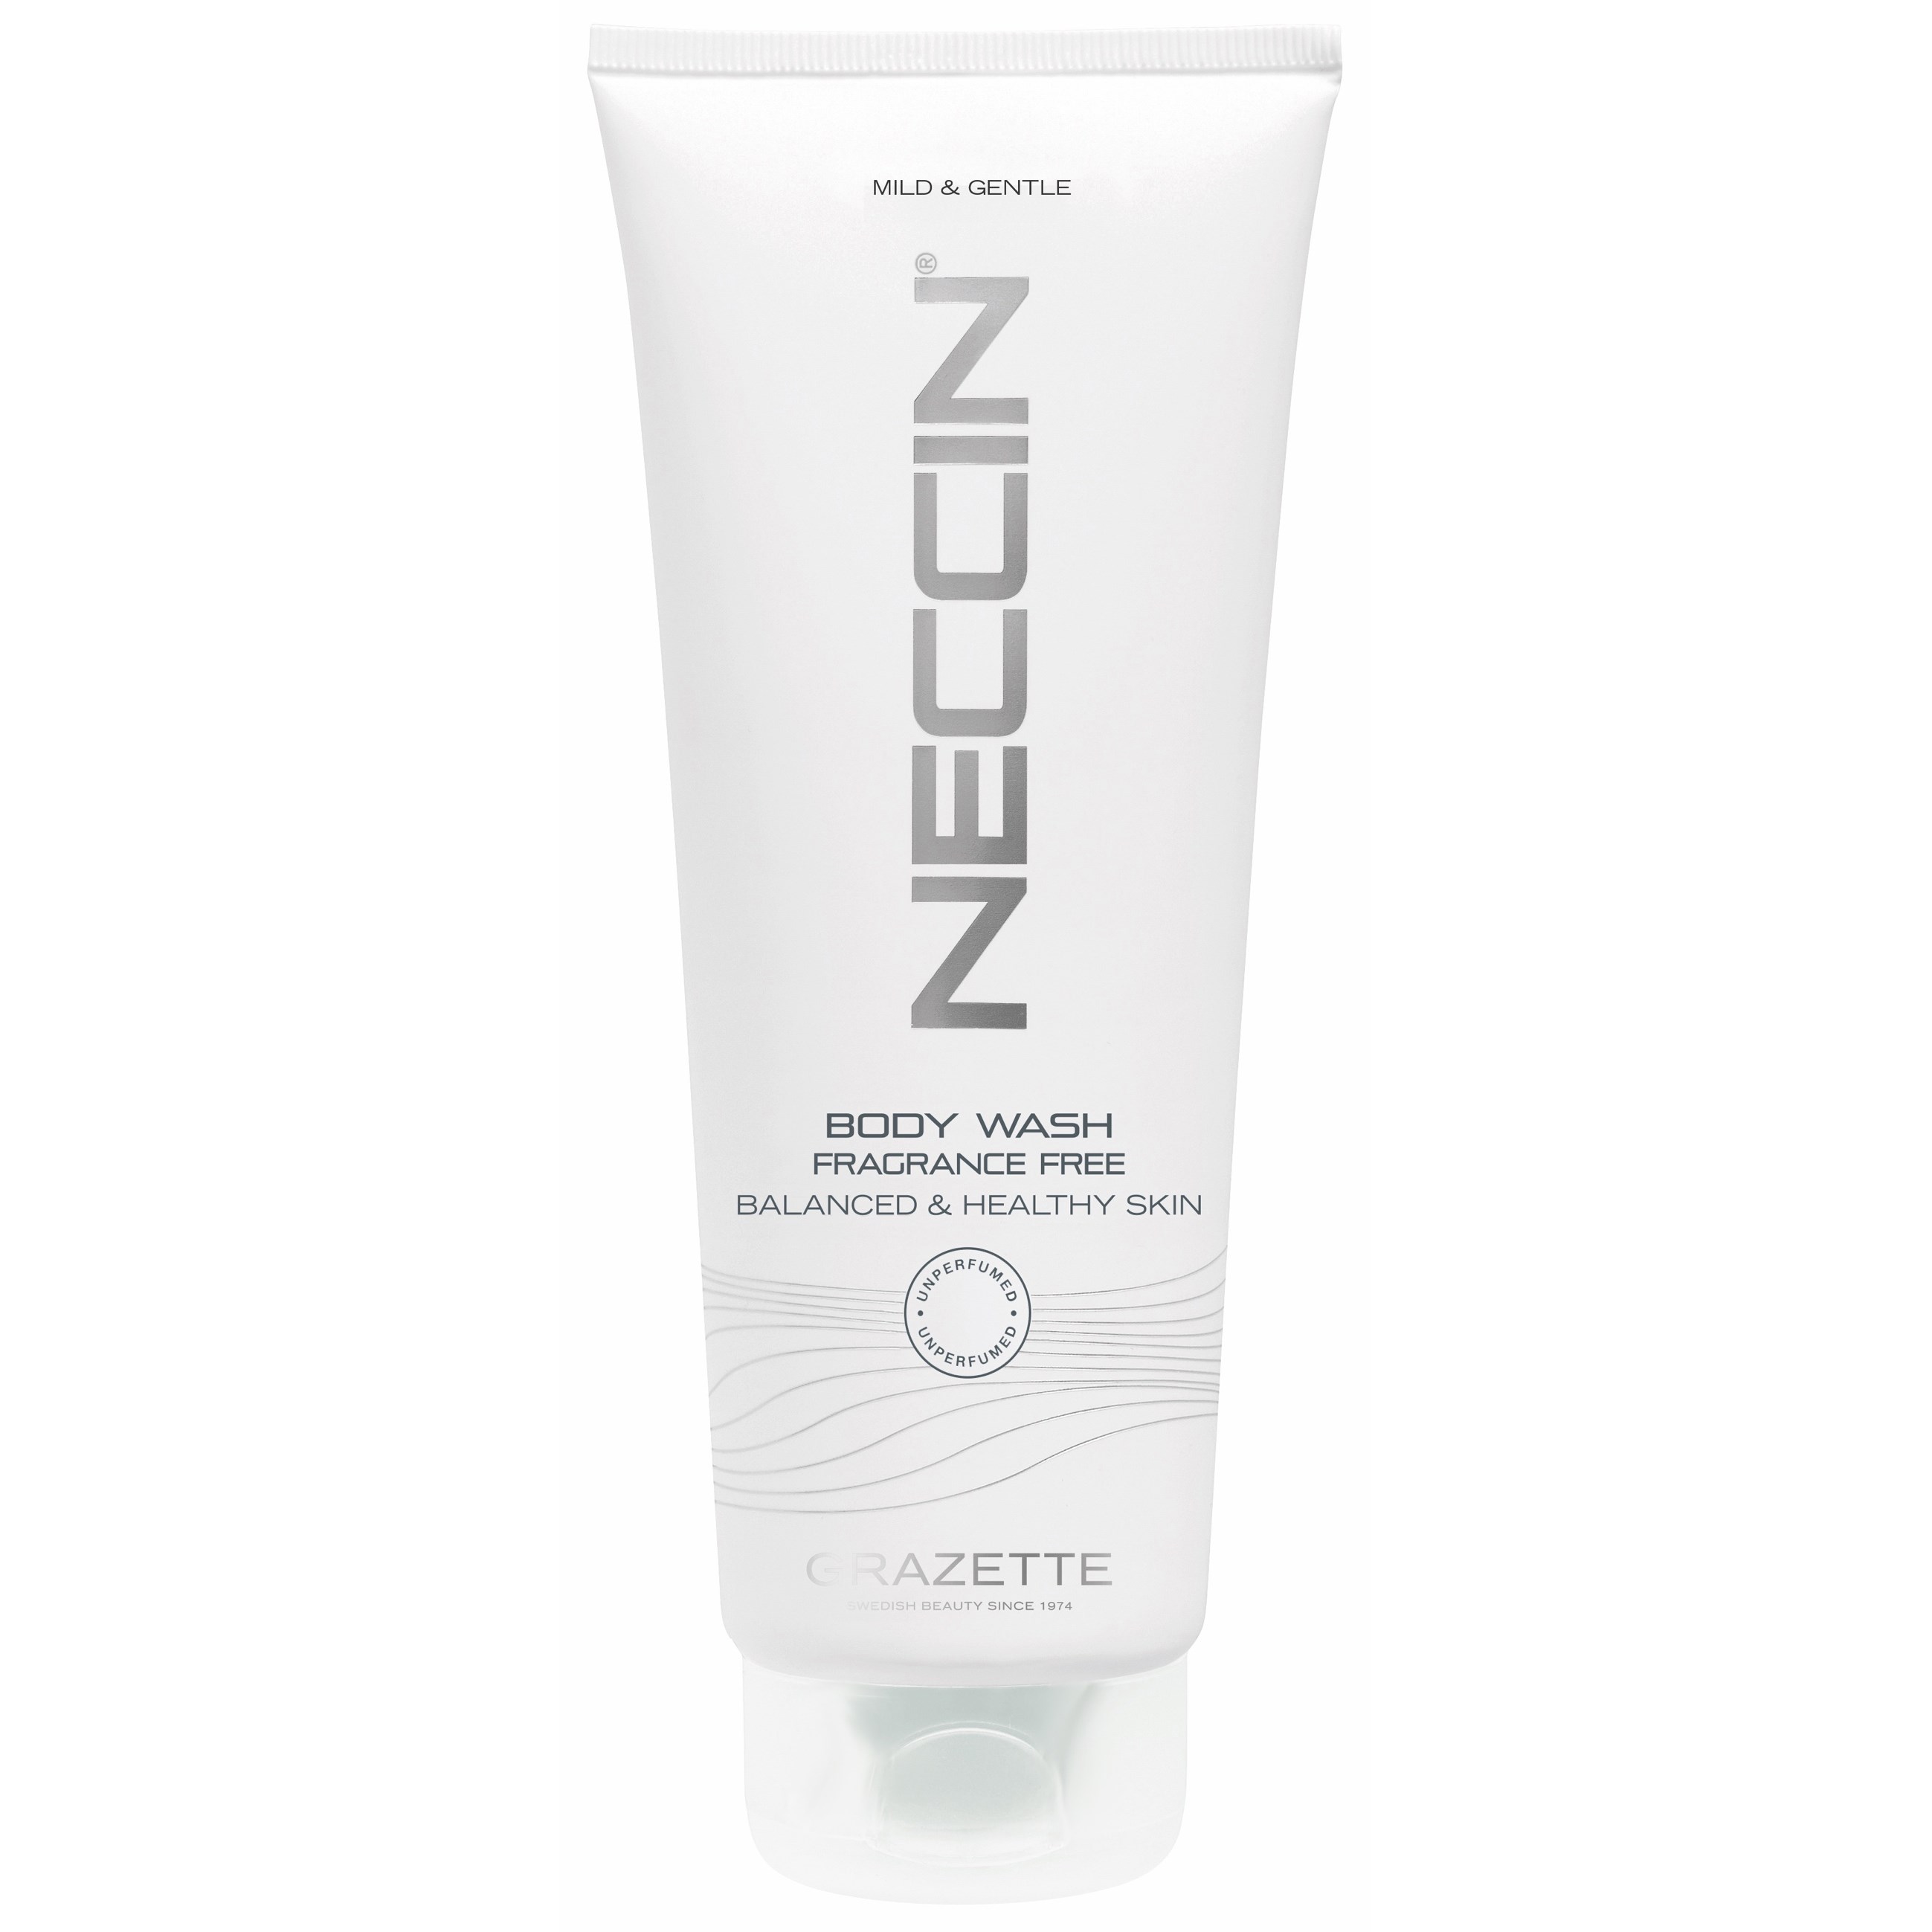 Grazette Neccin Body Wash Balanced & Healthy Skin Fragrance Free 200 m